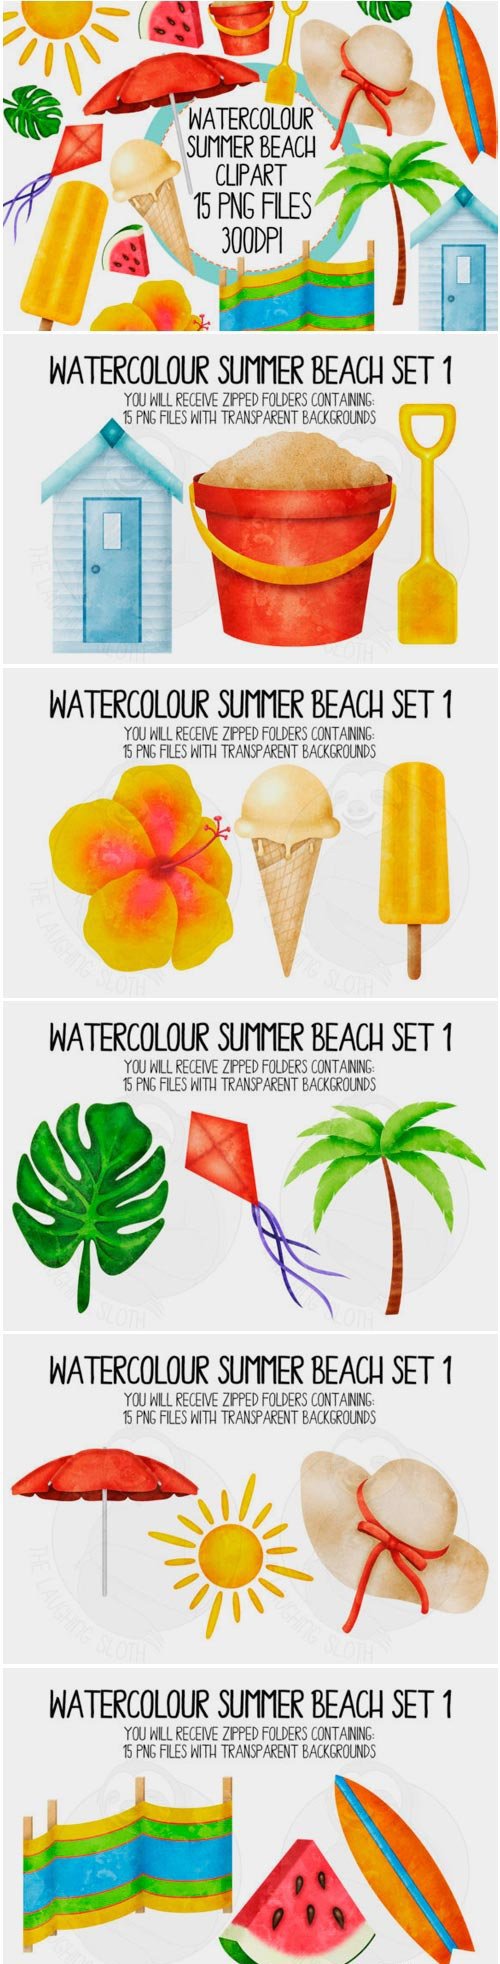 Watercolour Summer Beach Set 1 1575825